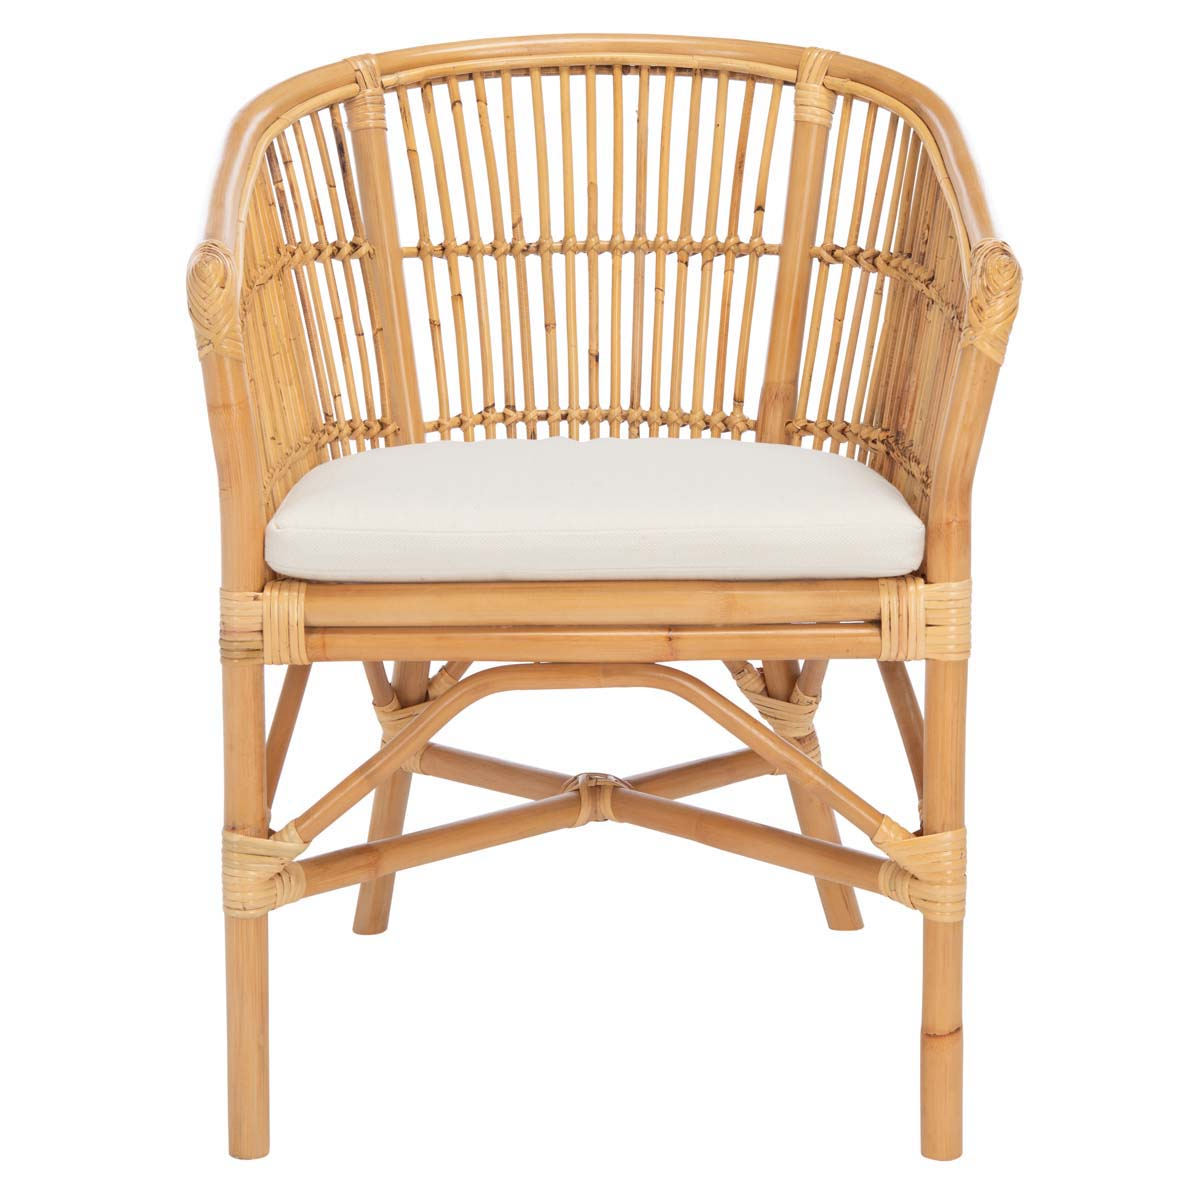 safavieh olivia rattan accent chair with cushion, ach6516